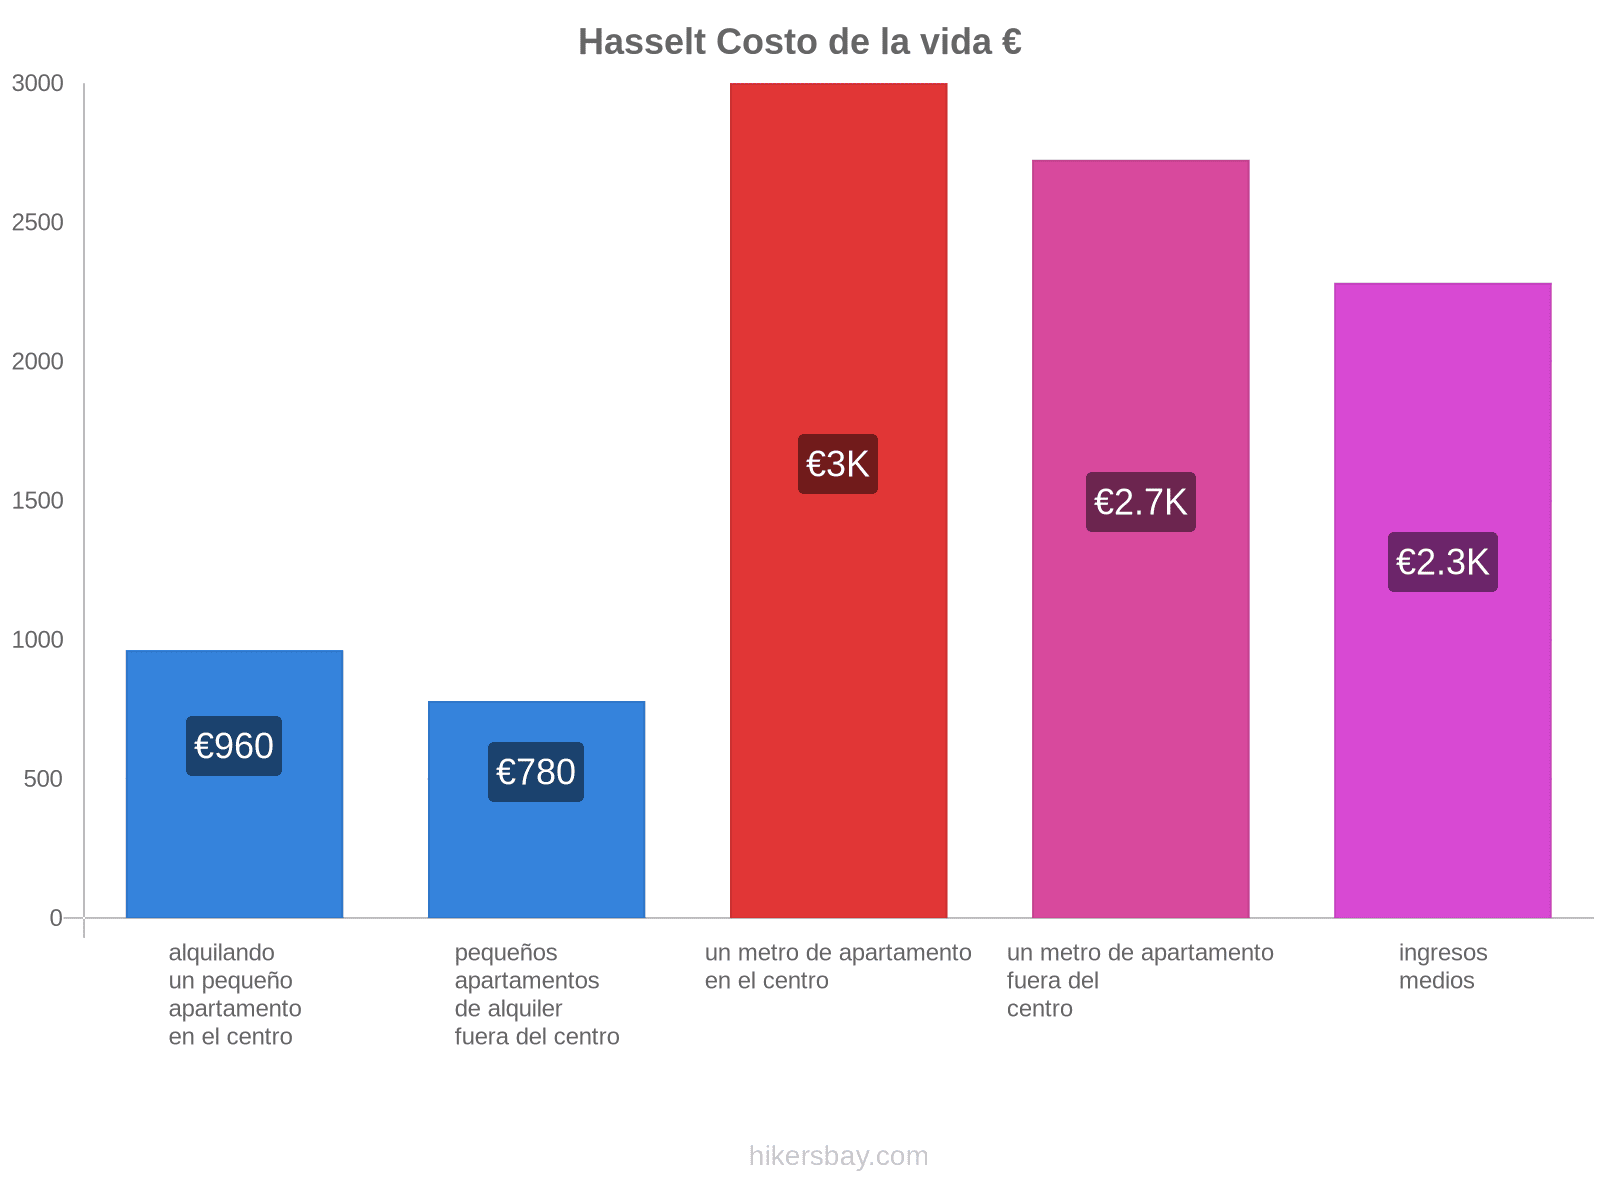 Hasselt costo de la vida hikersbay.com